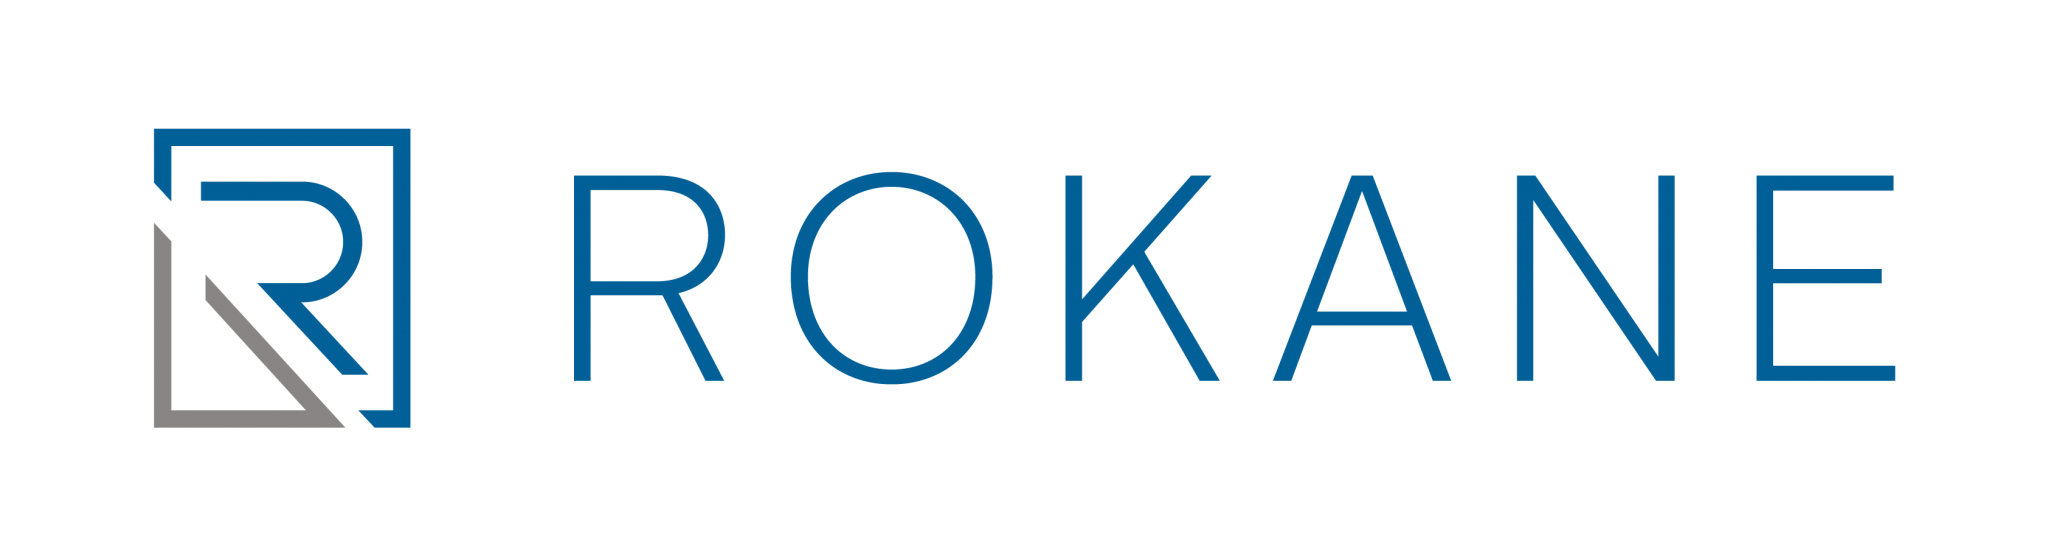 Rokane-logo-01-2048x555